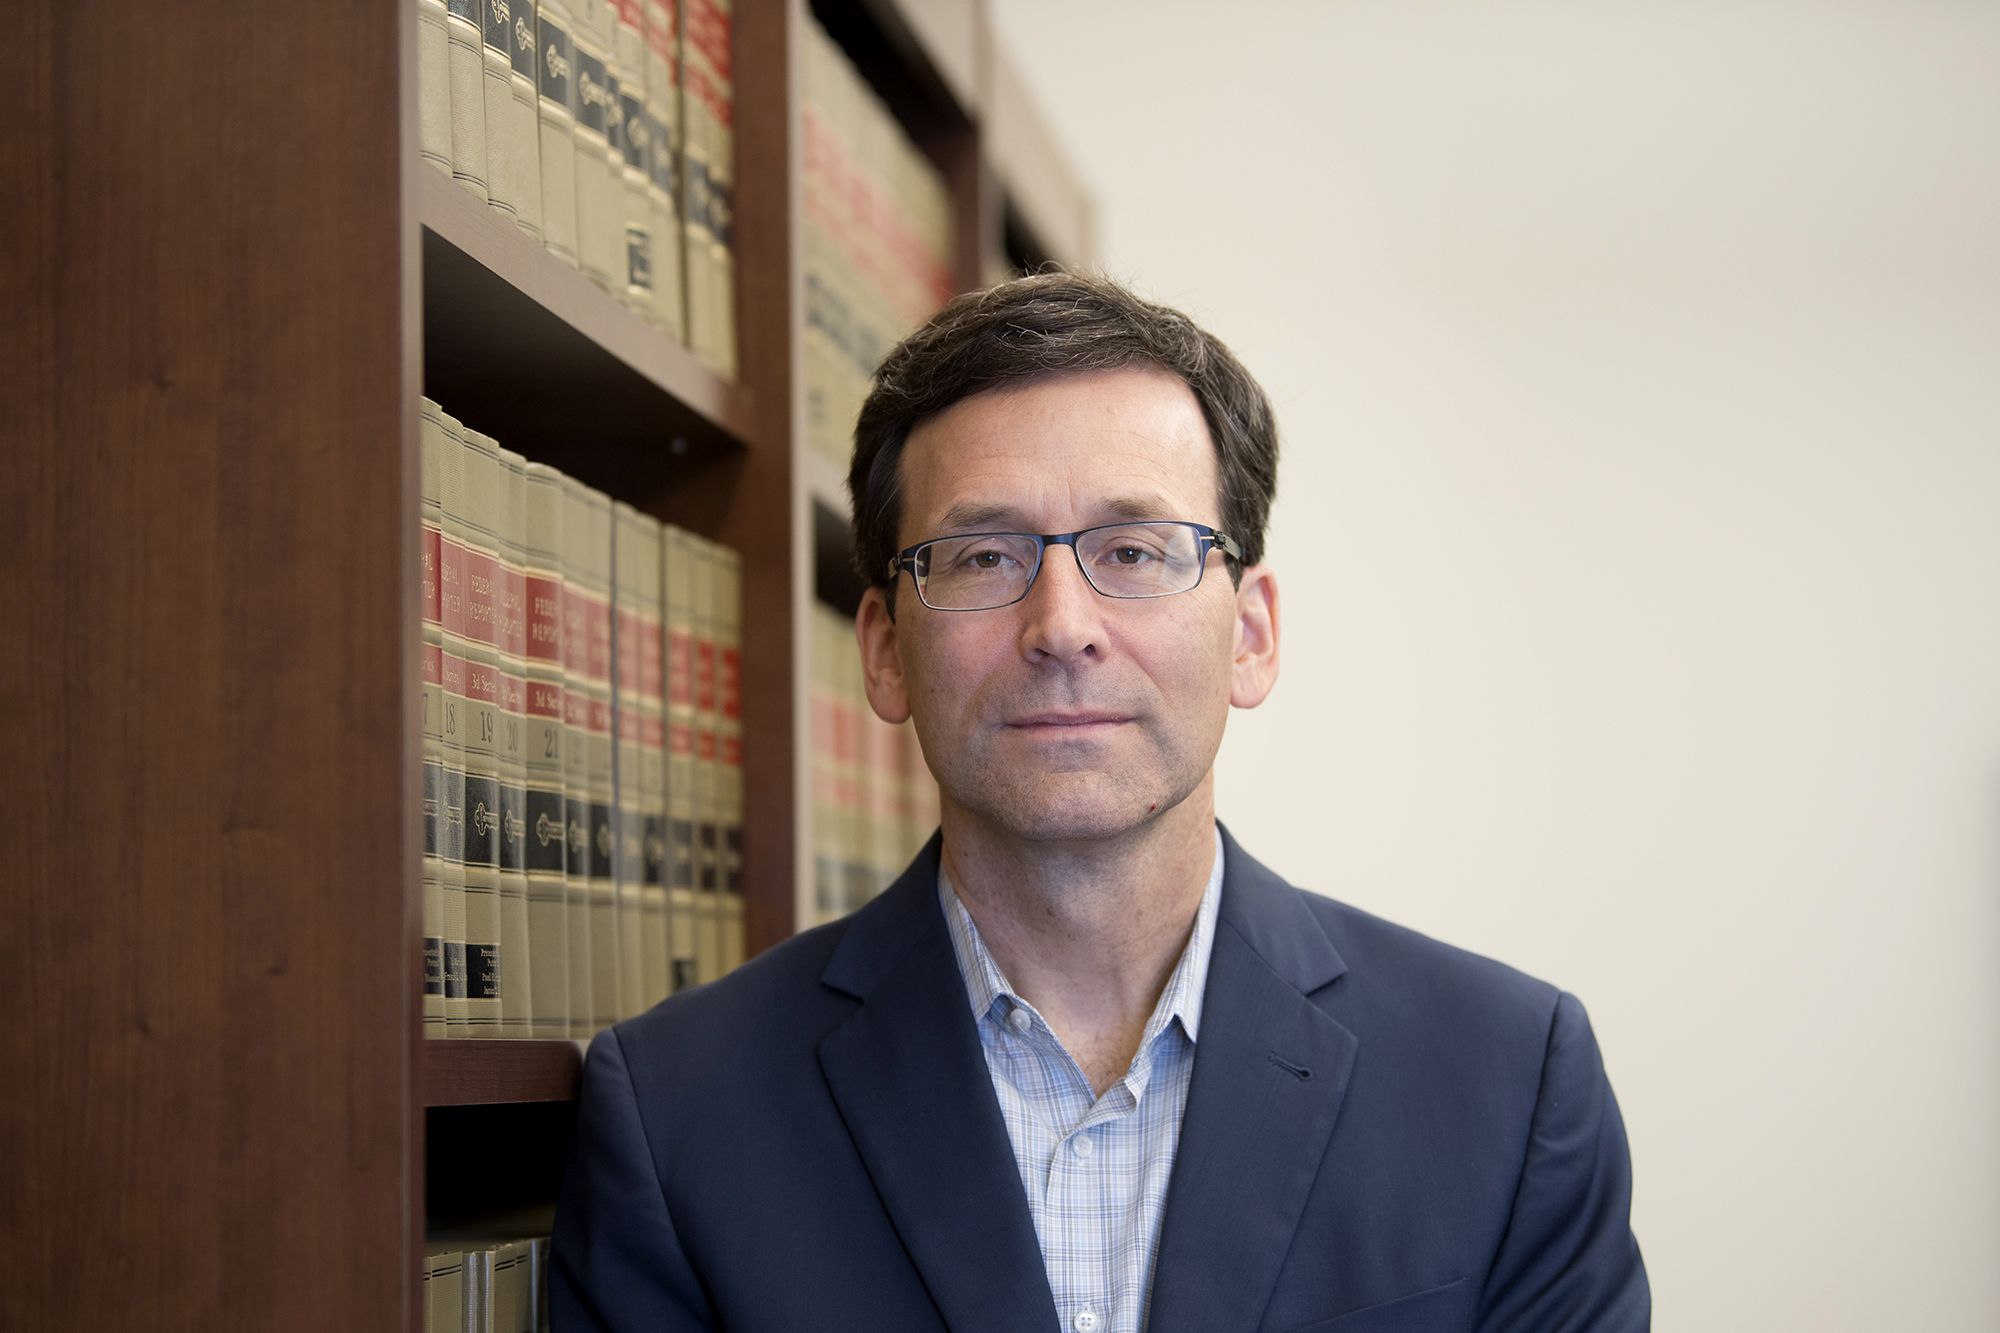 Washington Attorney General Bob Ferguson. Image by Amanda Cowan. United States, 2019.